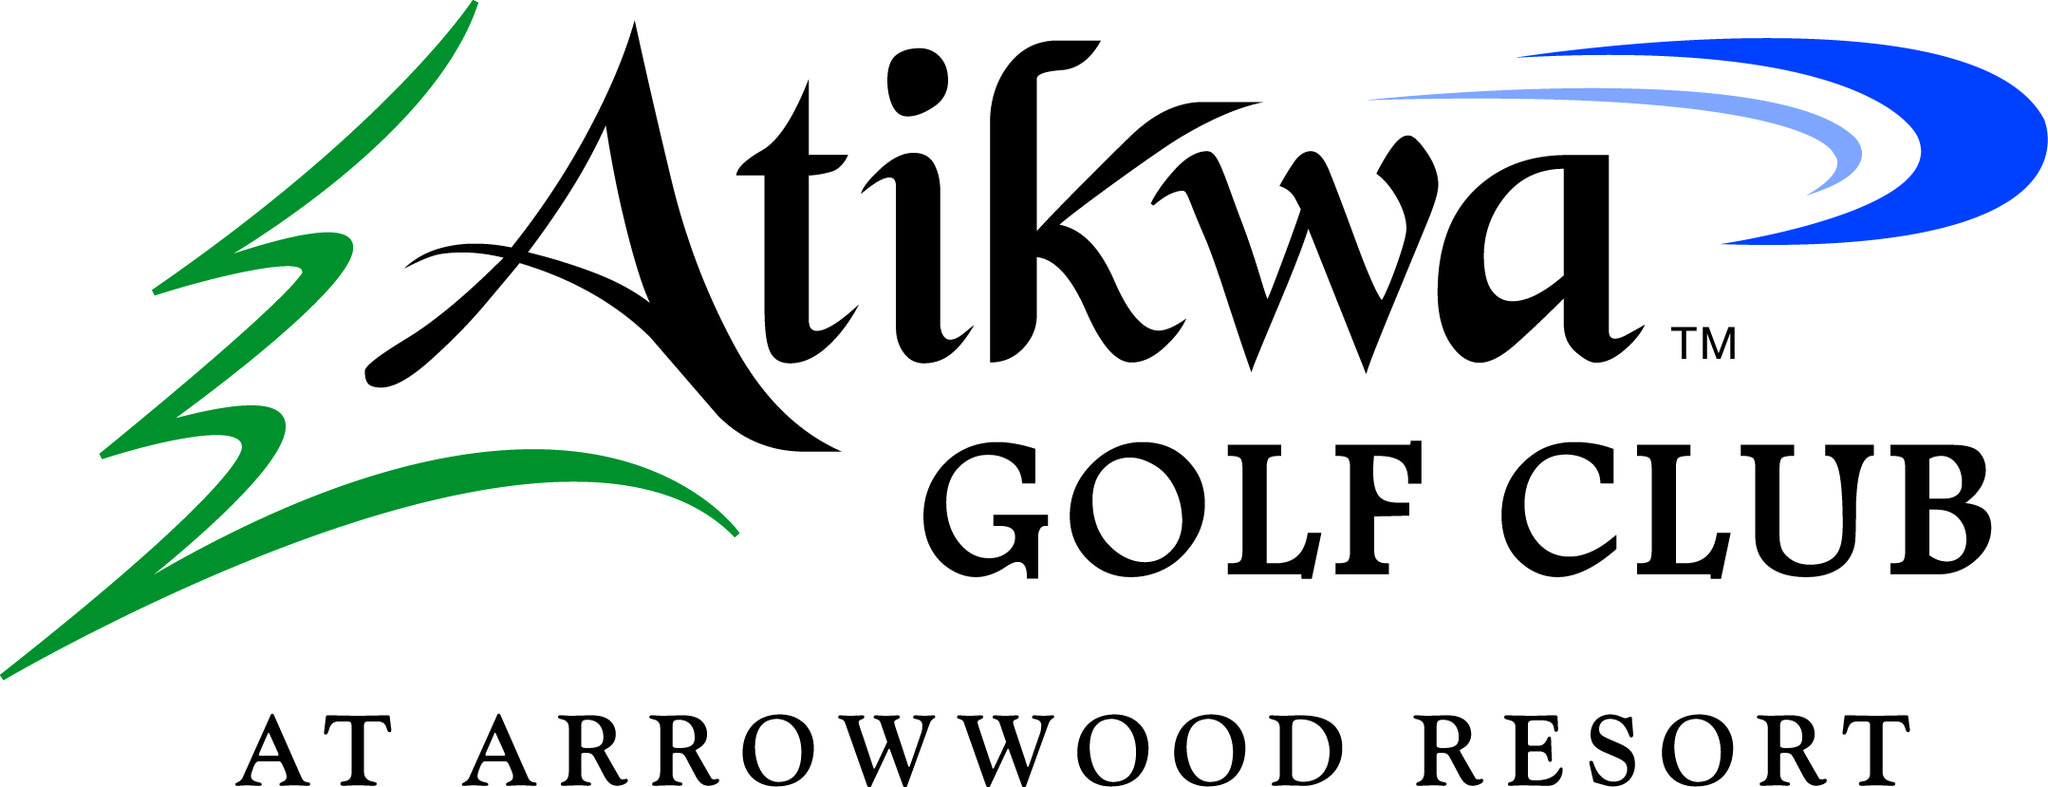 atikwa golf club logo